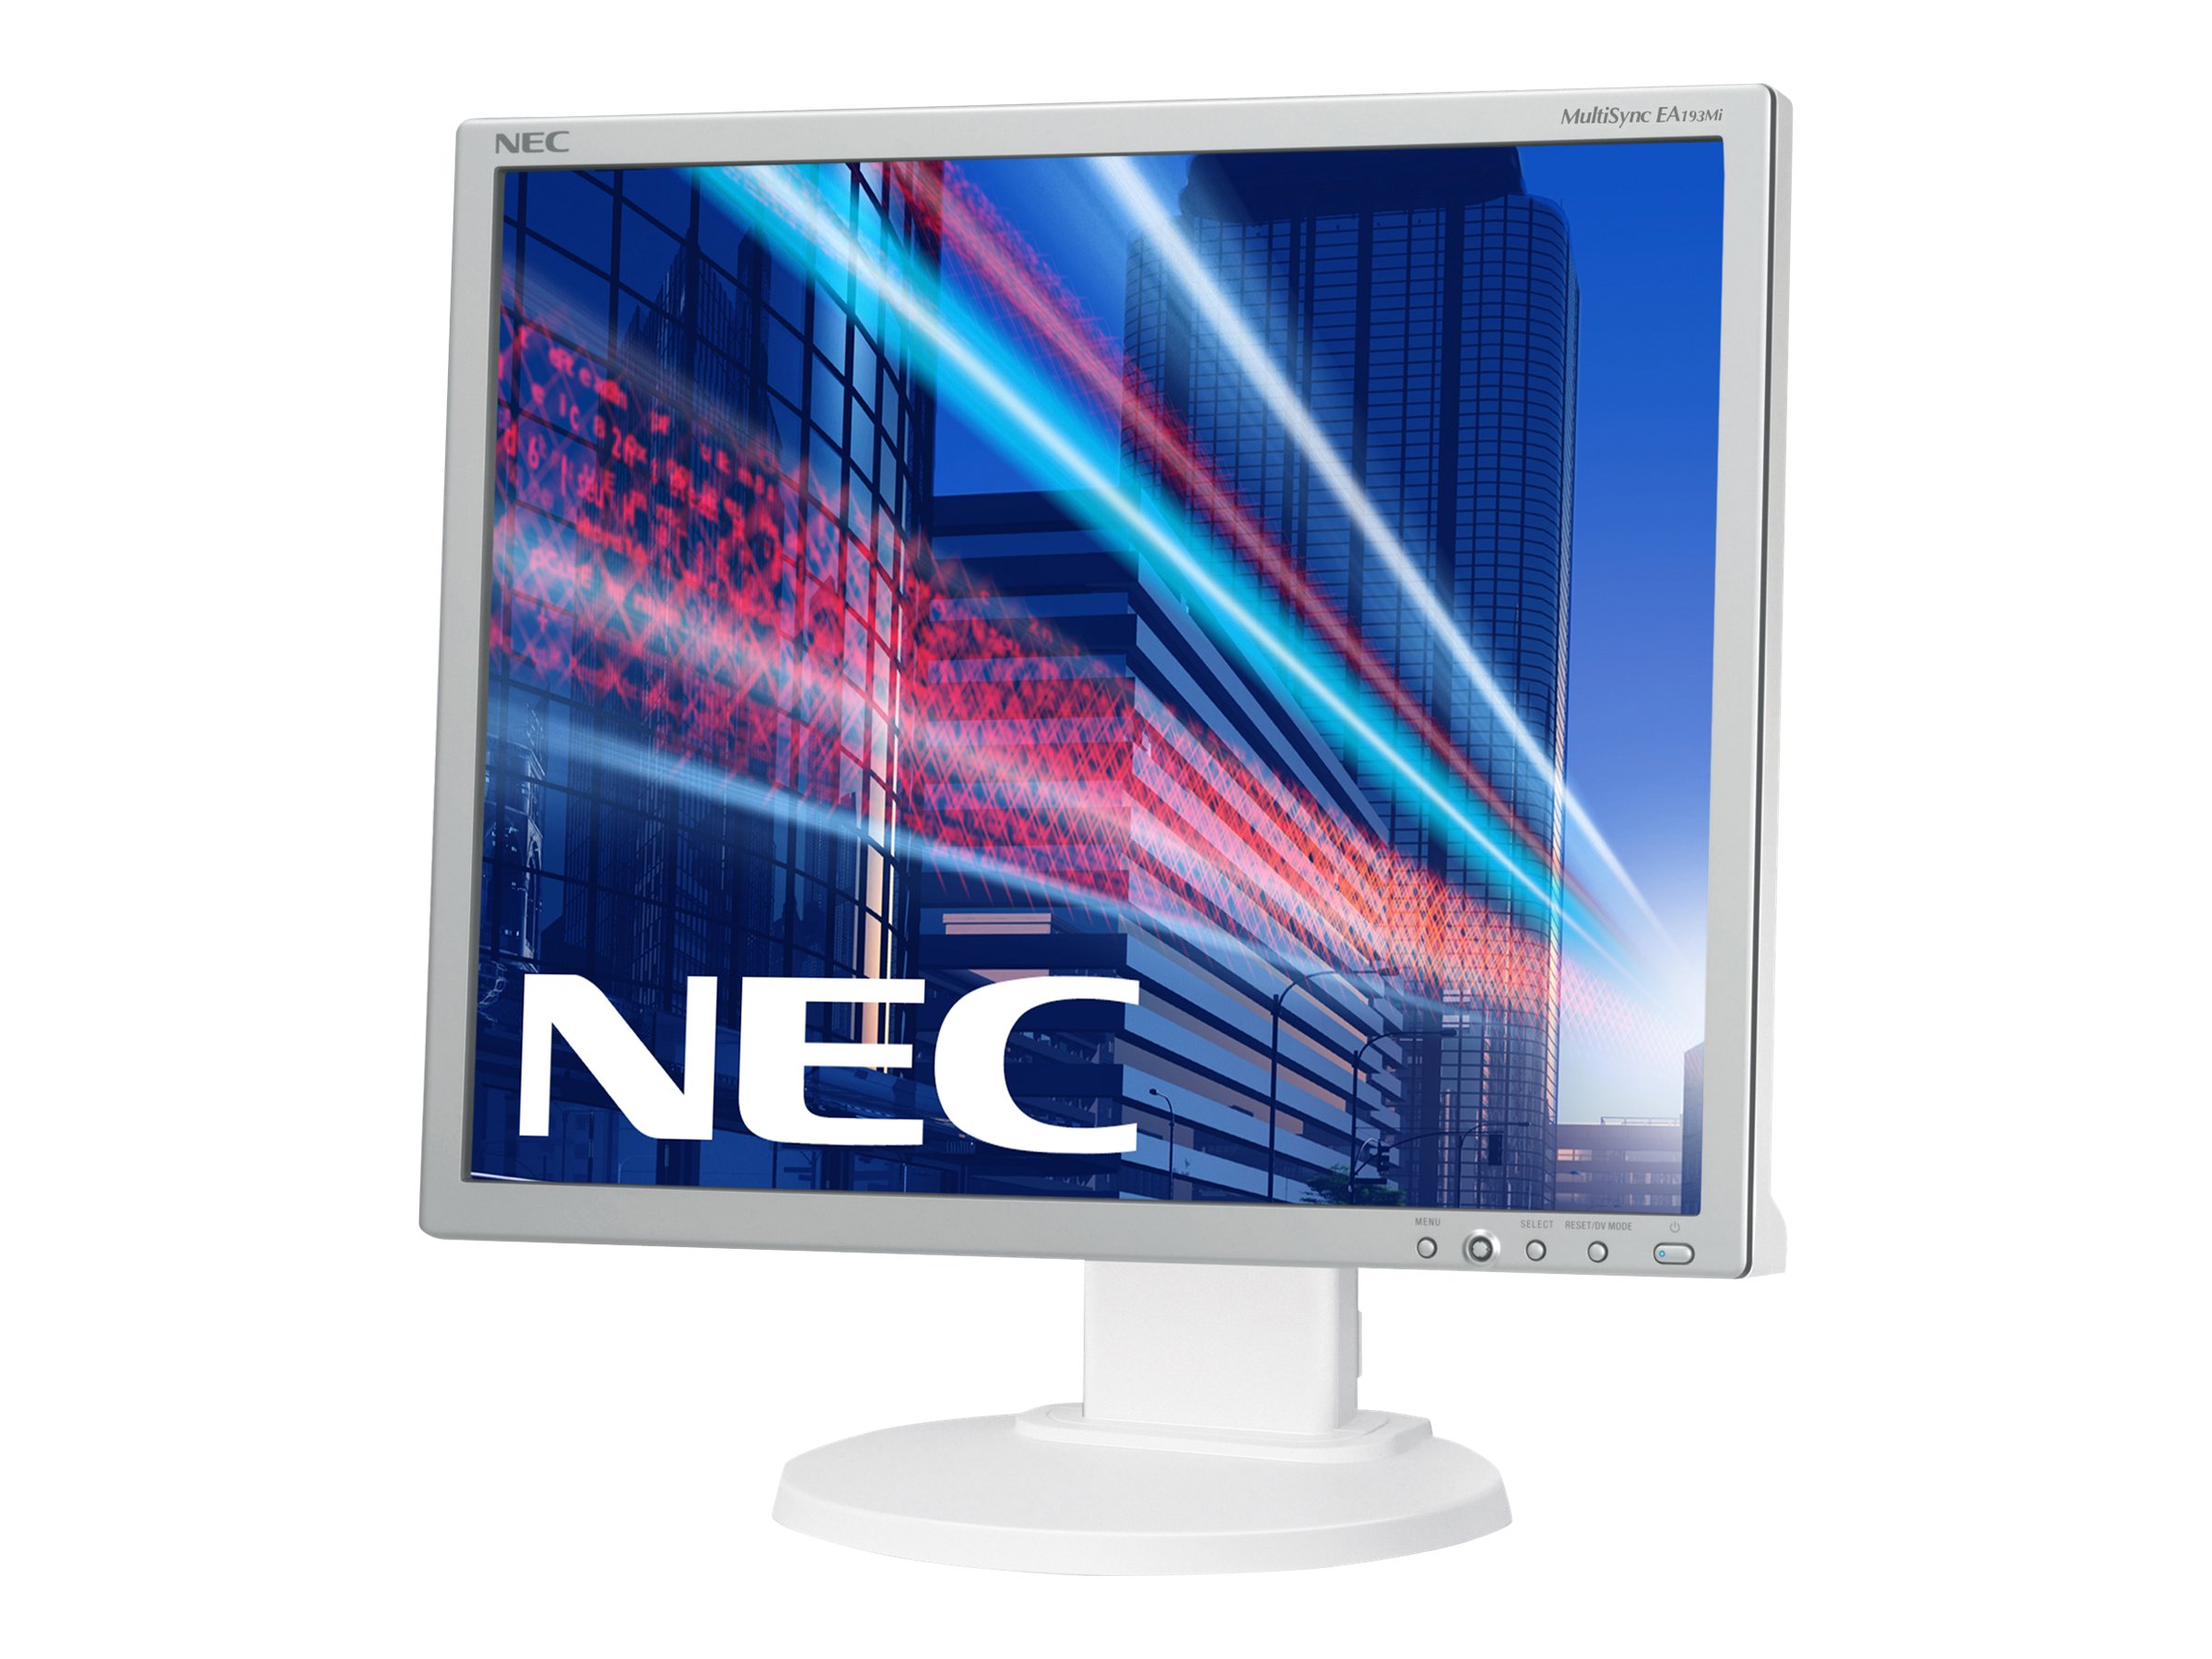 NEC MultiSync EA193Mi - Écran LED - 19" - 1280 x 1024 - IPS - 250 cd/m² - 1000:1 - 6 ms - DVI, VGA, DisplayPort - haut-parleurs - blanc, argent - 60003585 - Écrans d'ordinateur